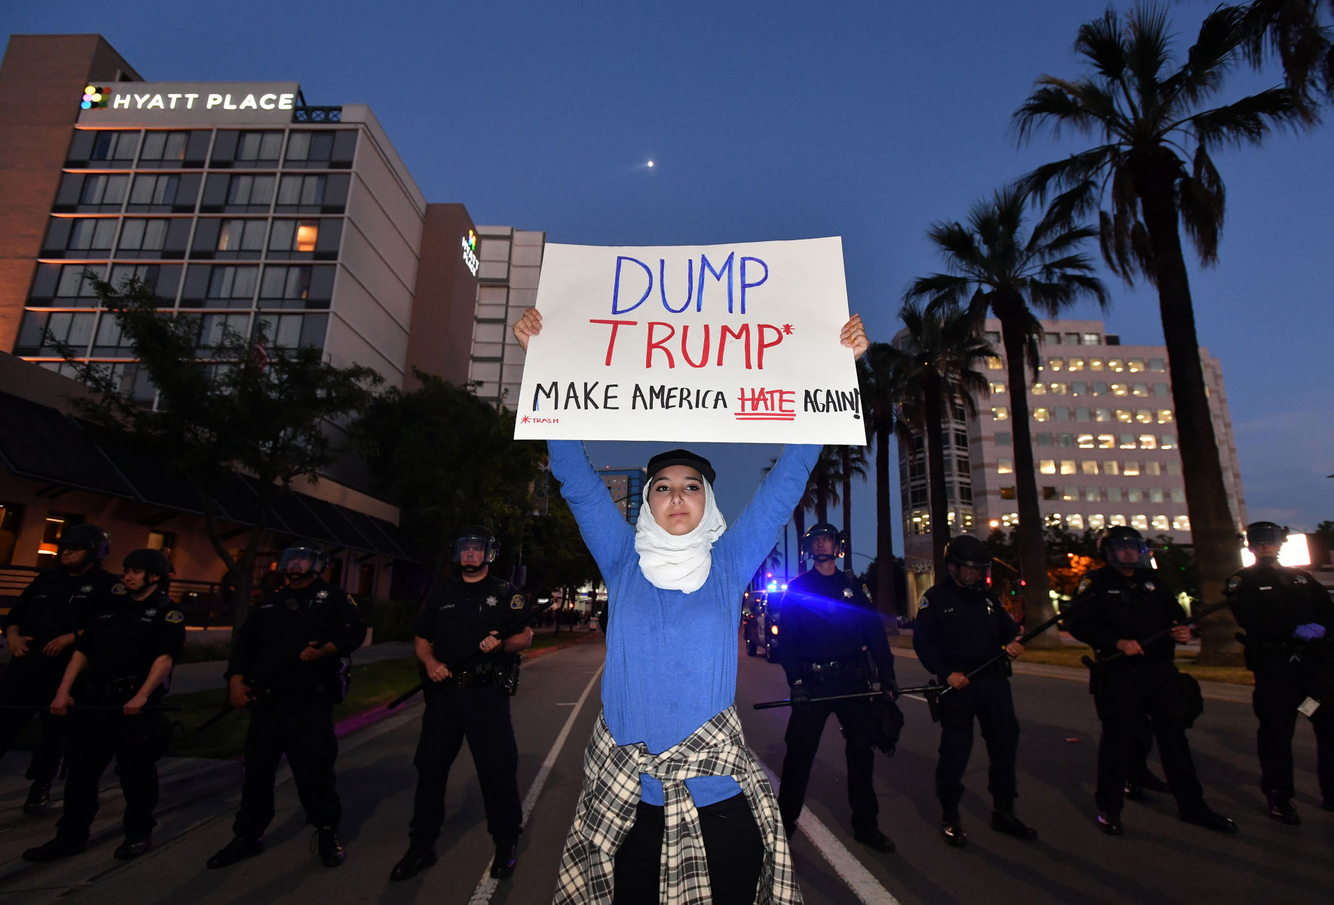 Anti-Trump protest